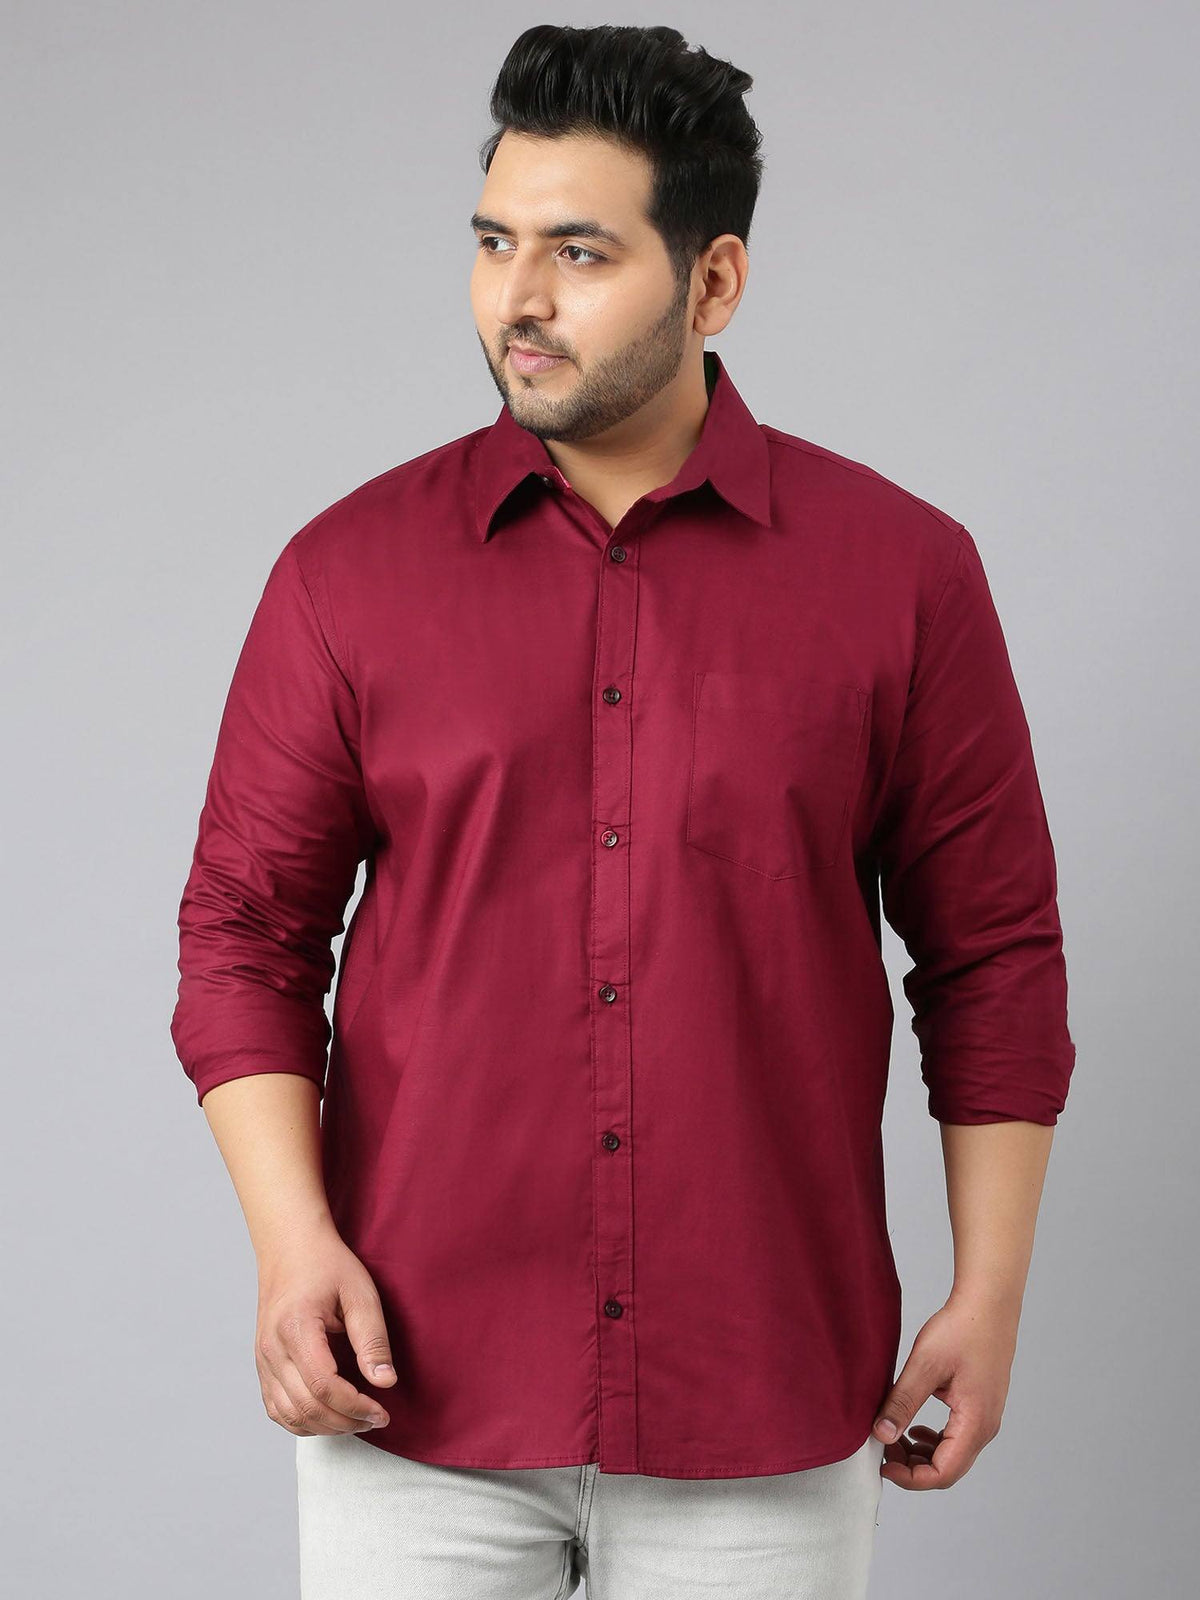 Maroon Oxford Pure Cotton Shirt Men's Plus Size - Guniaa Fashions